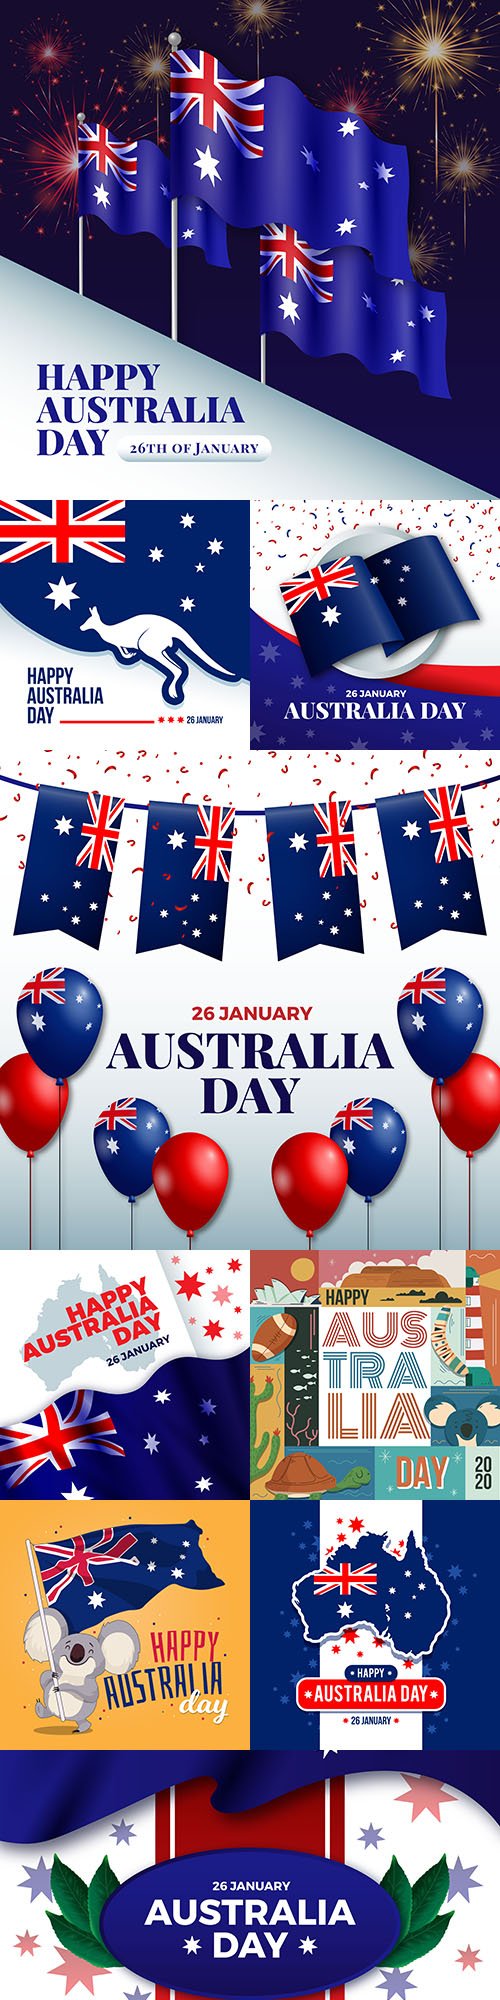 Happy Australia day holiday design illustrations